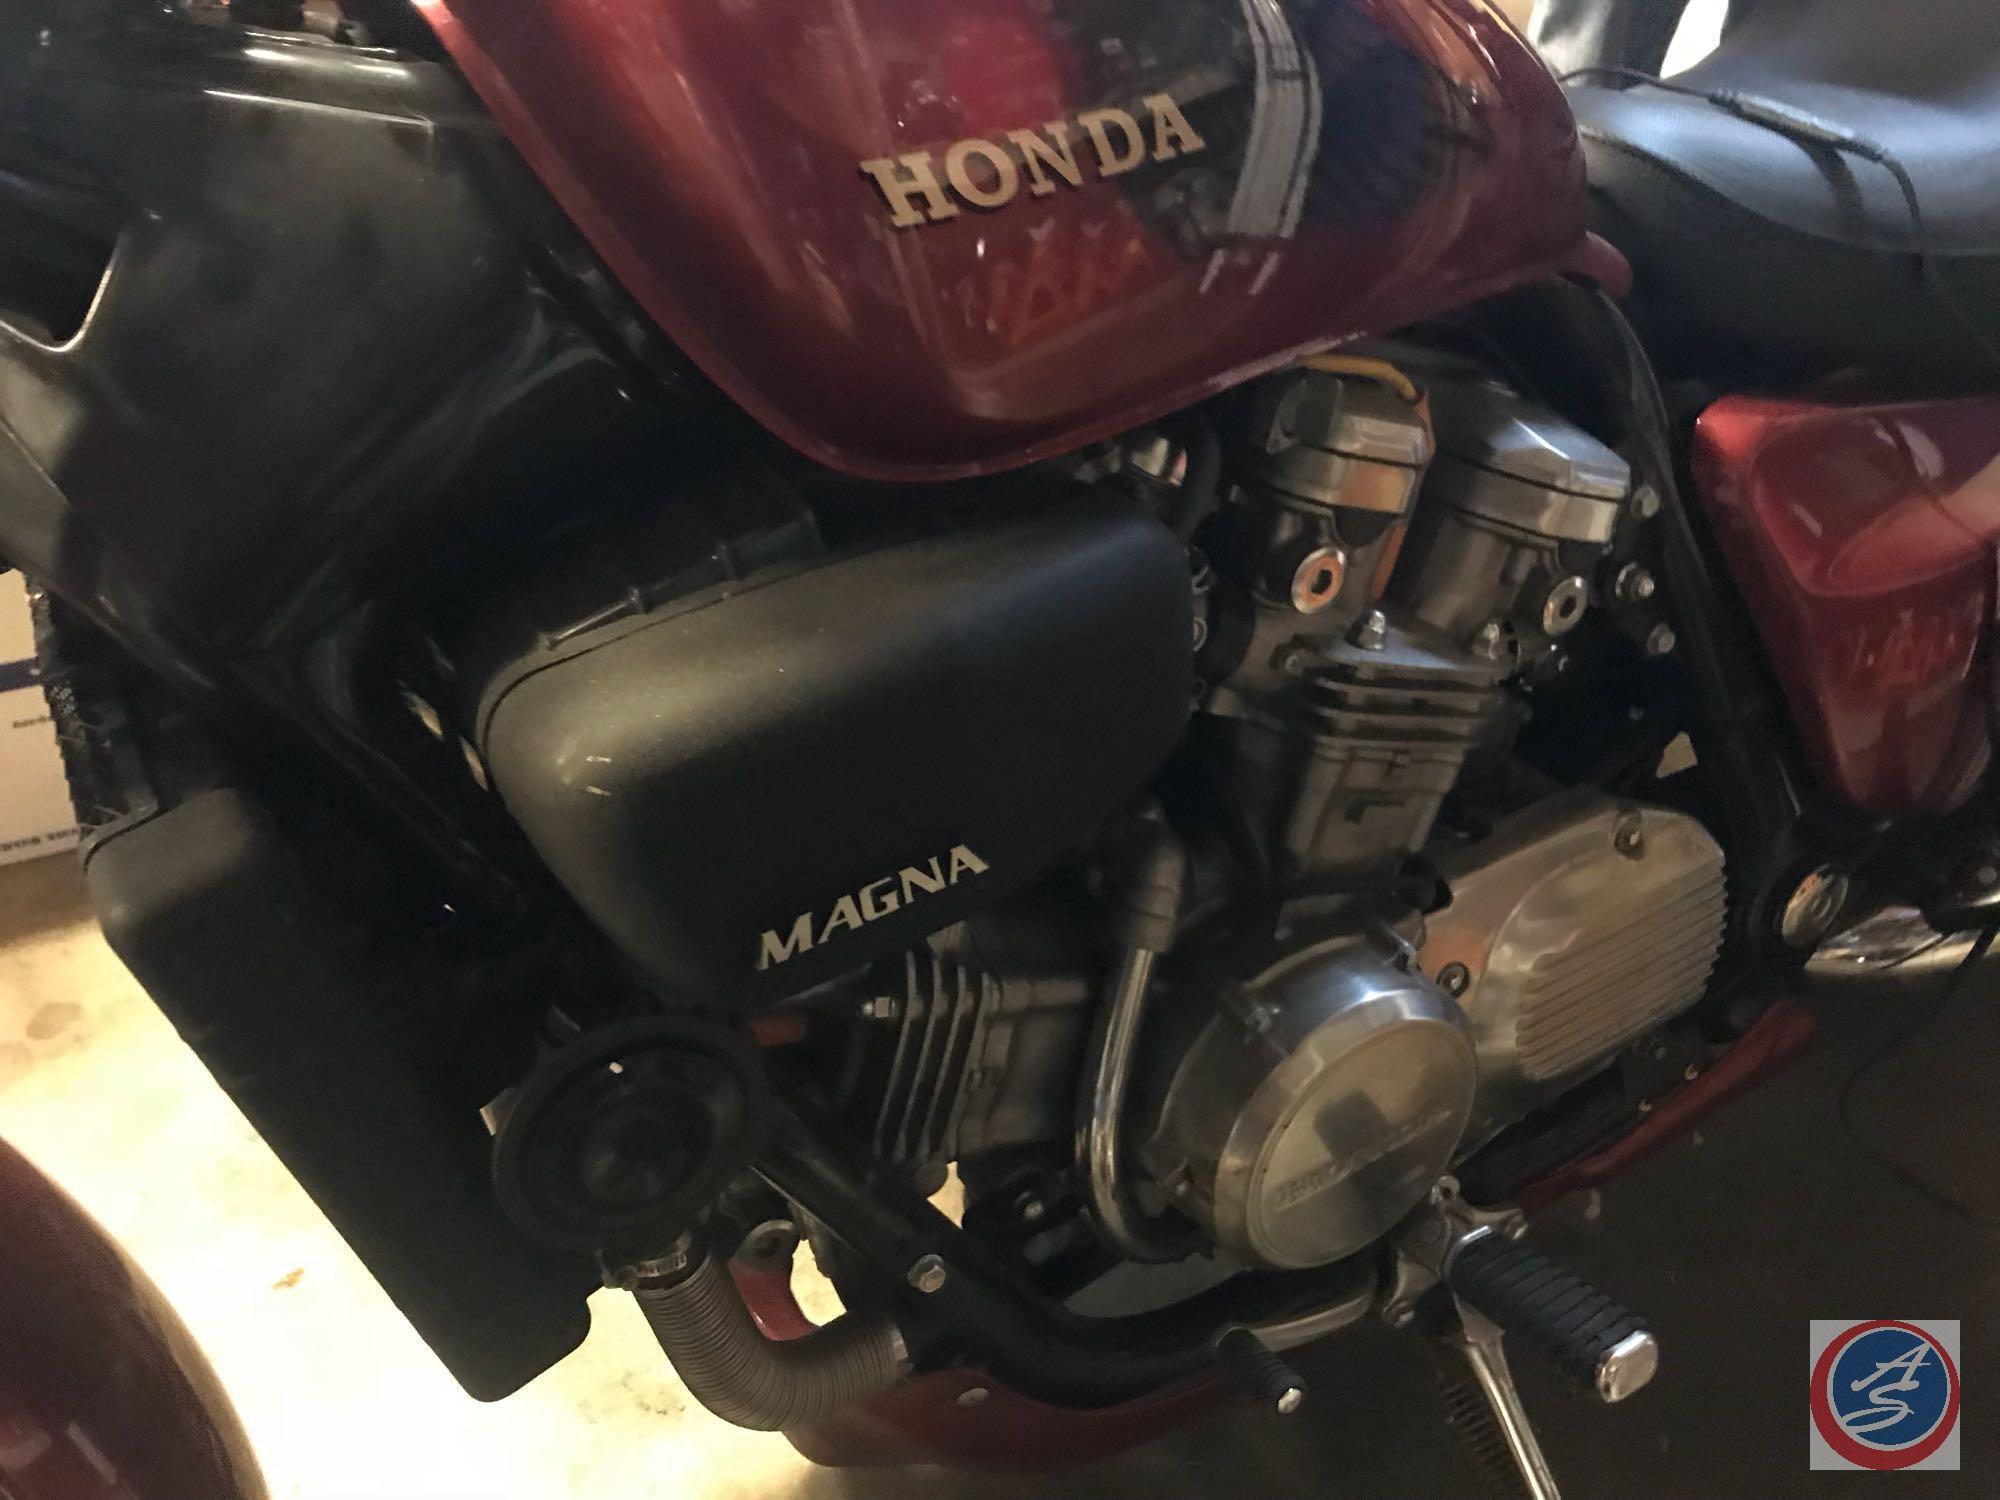 1987 Honda VF700 Motorcycle, VIN # 1HFRC2109HA310393